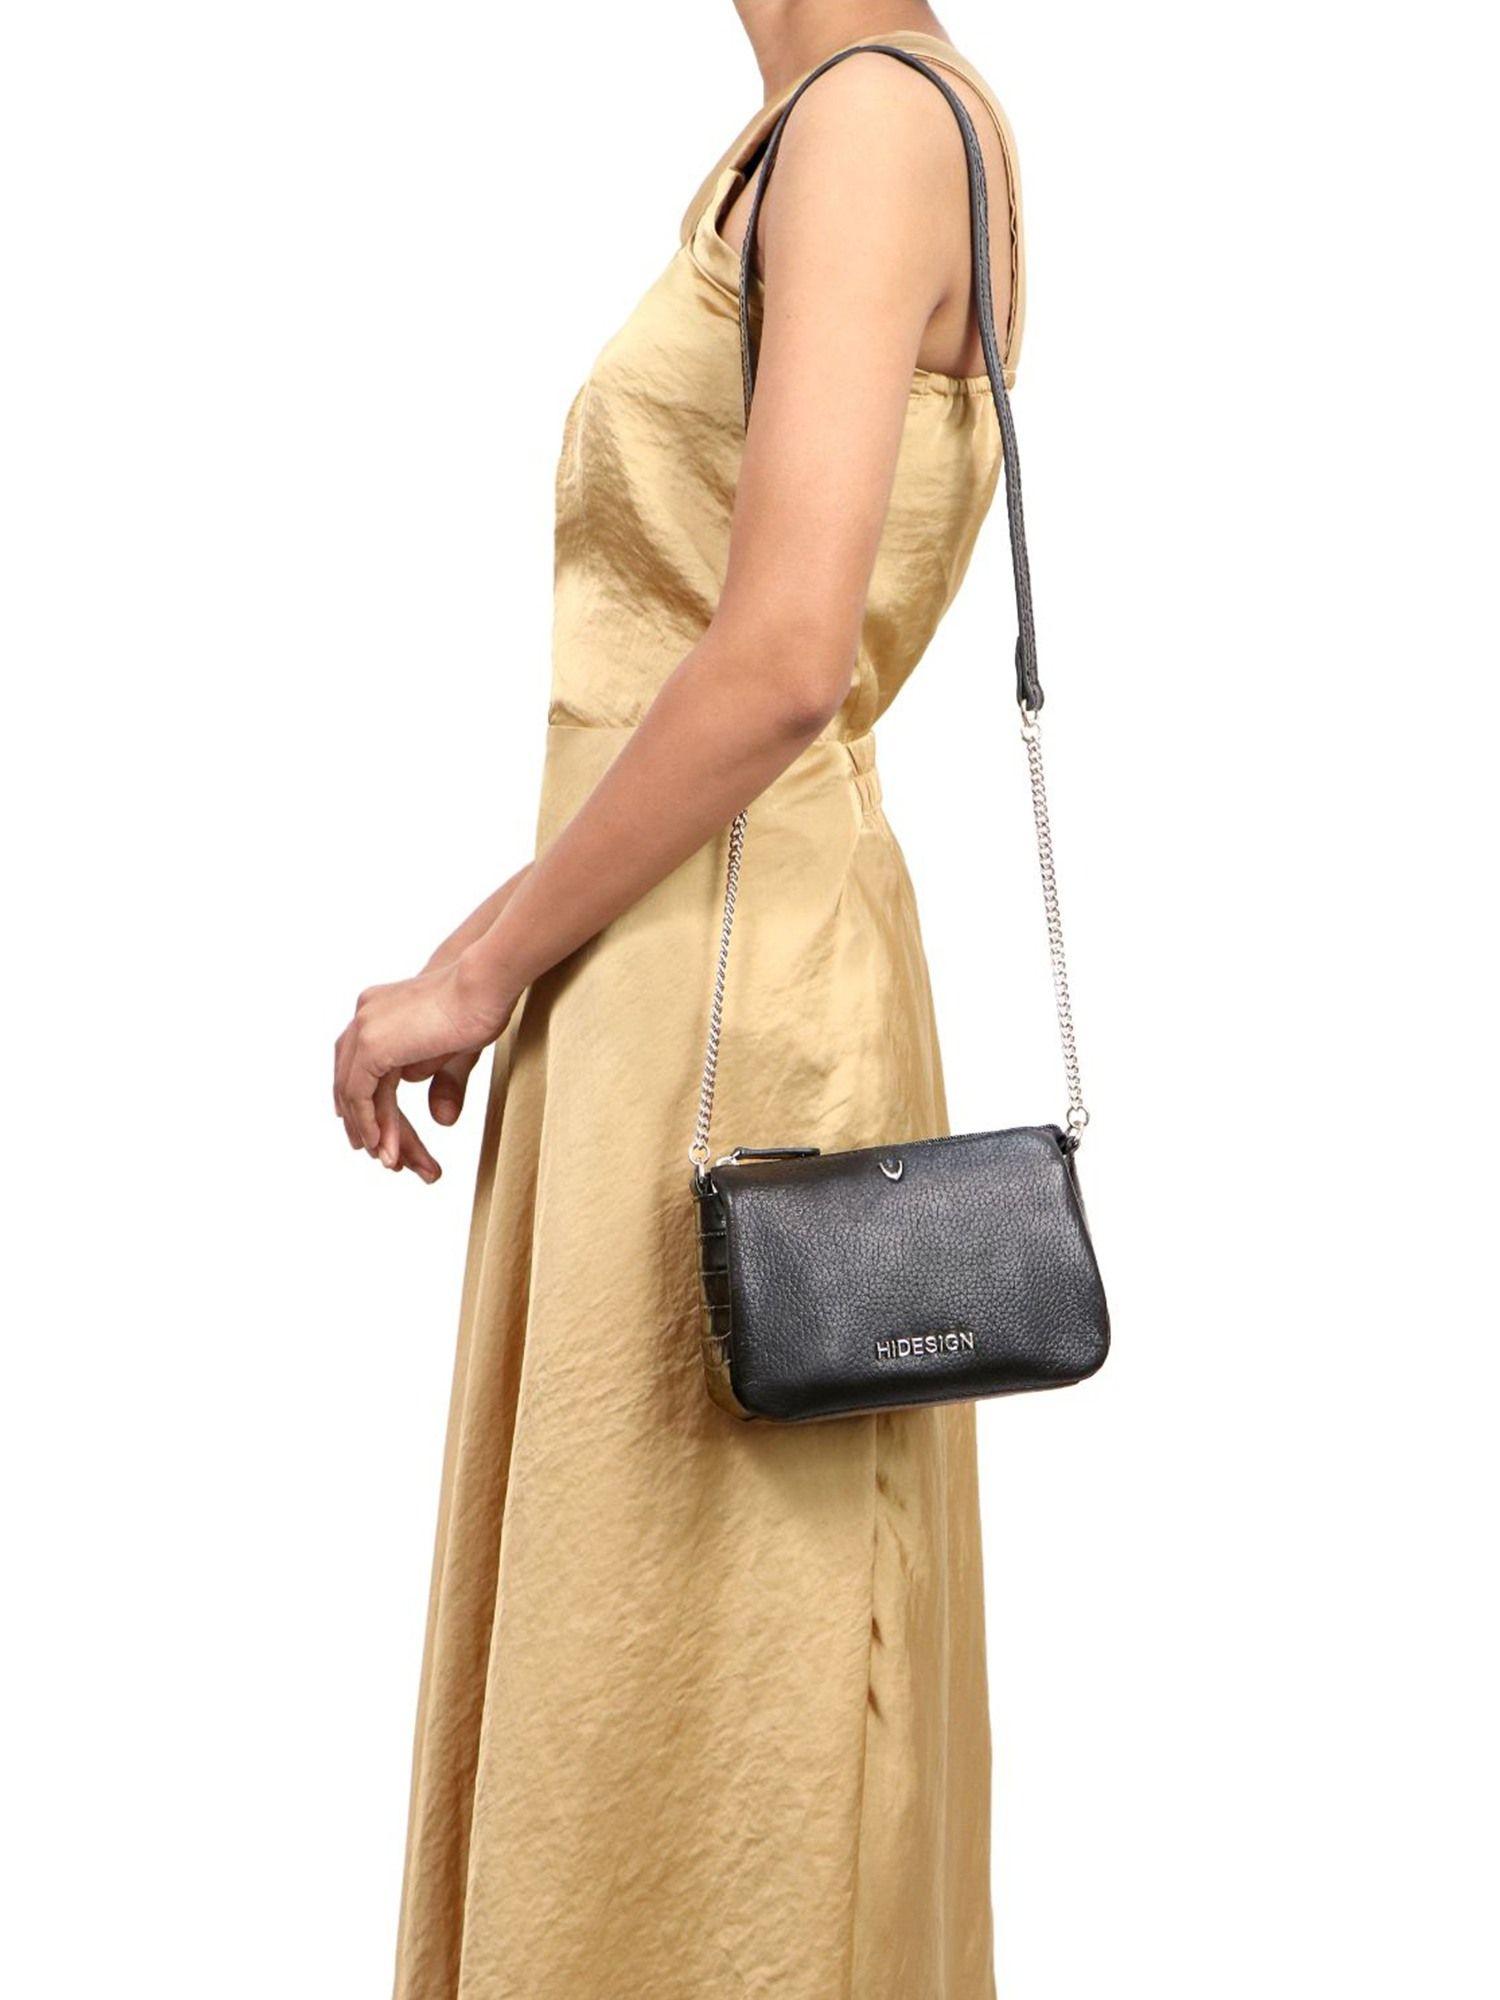 corso 01 women's sling bag stylish black for everyday elegance (s)